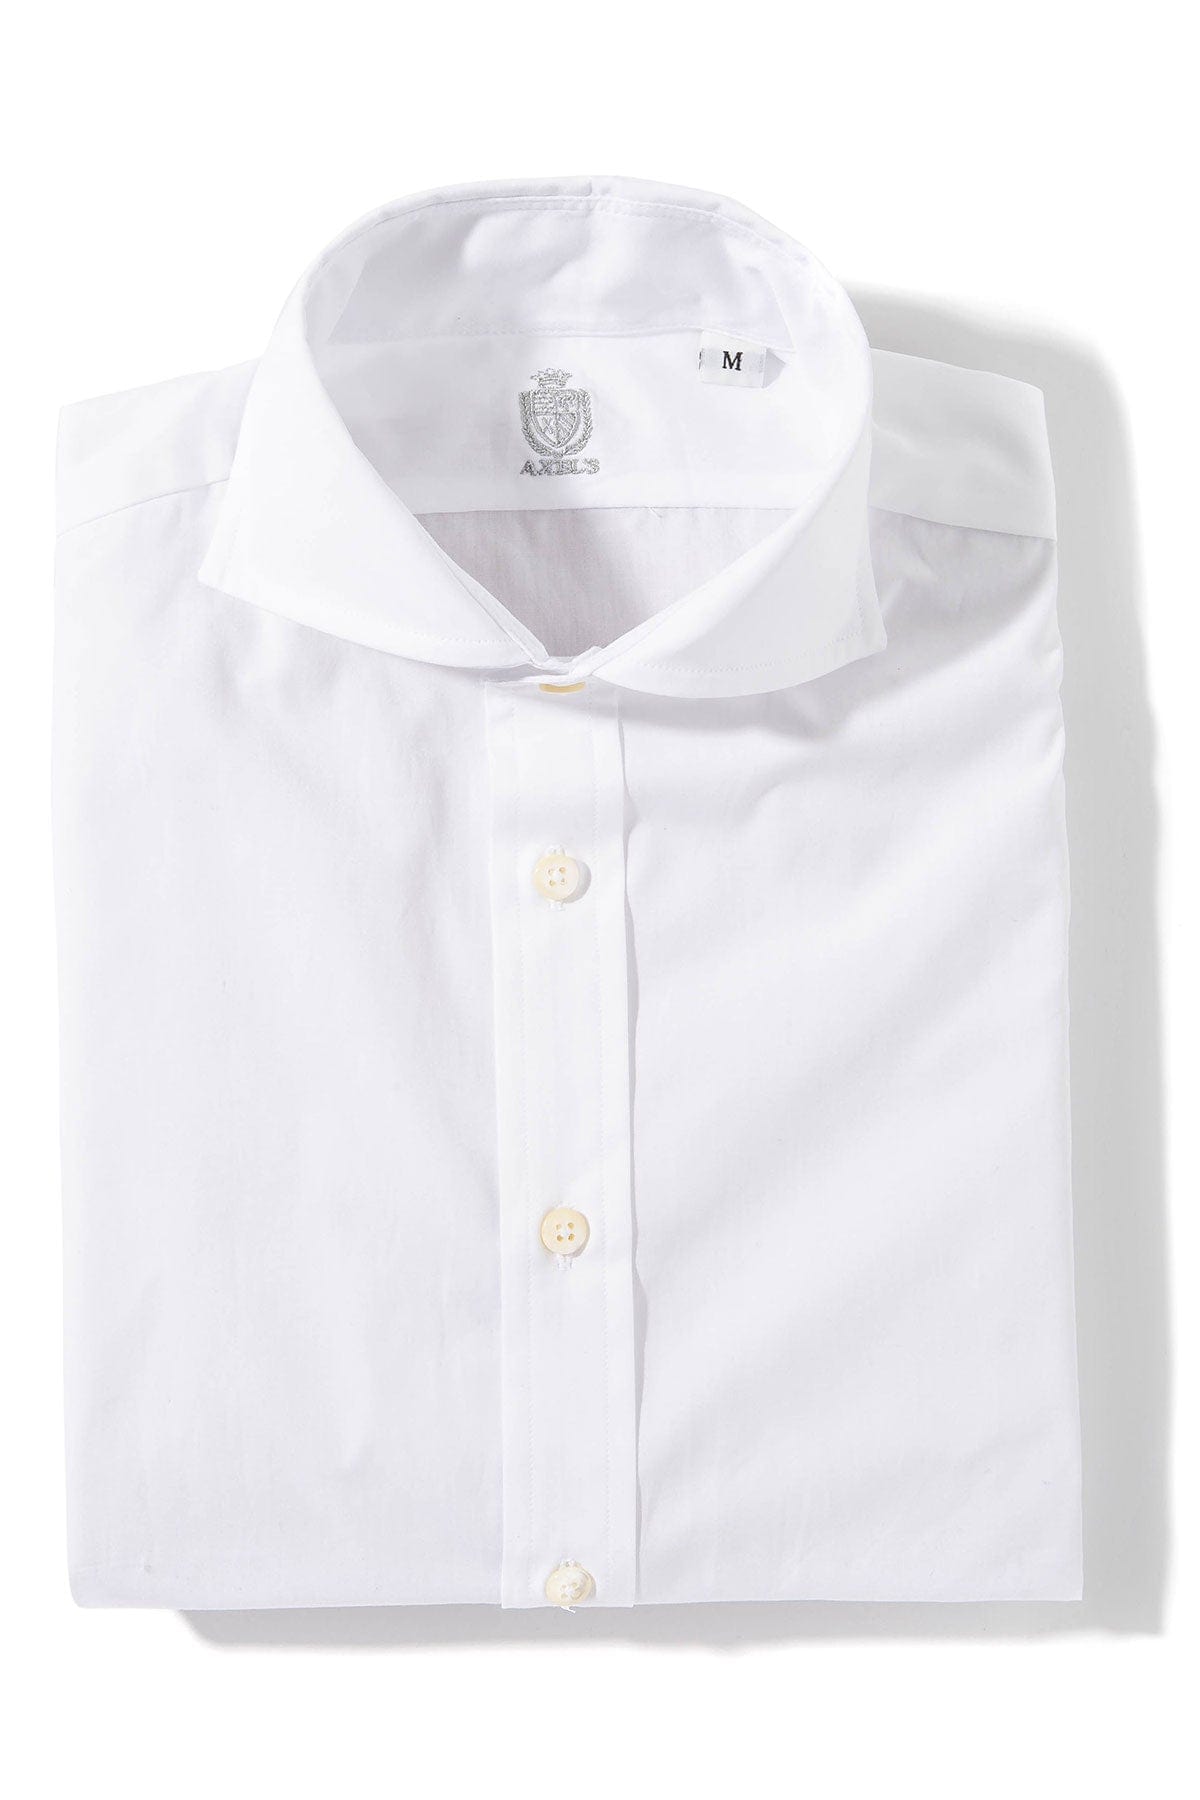 Pop White Dress Shirt - AXEL'S